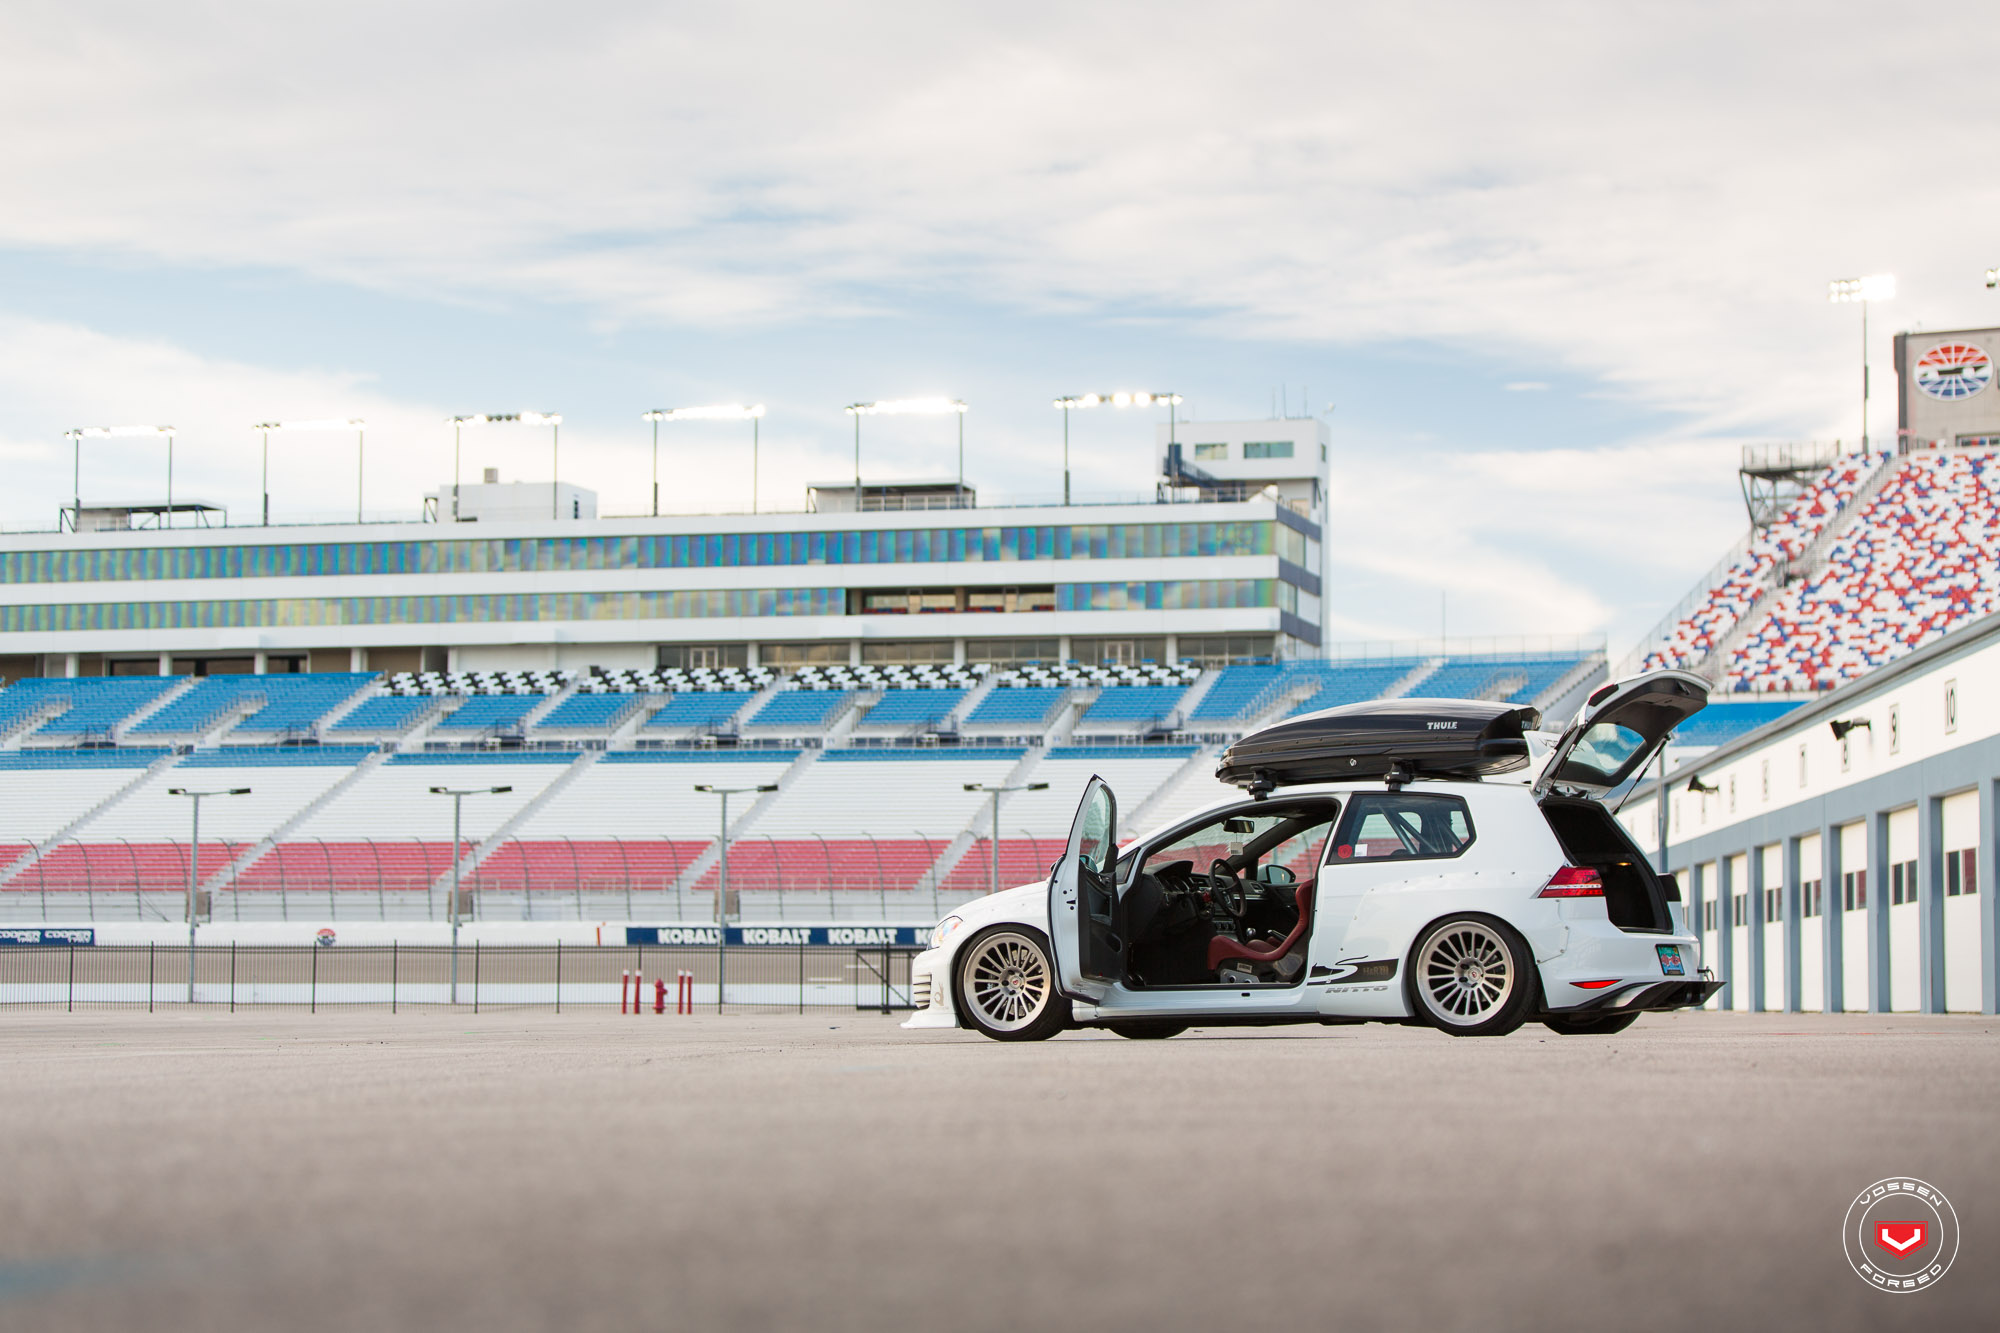 SDOBBINS VW MK7 GTI RS - Vossen Forged LC-106 Wheels - Las Vegas Motor Speedway - © Sam Dobbins 2016 - 4104